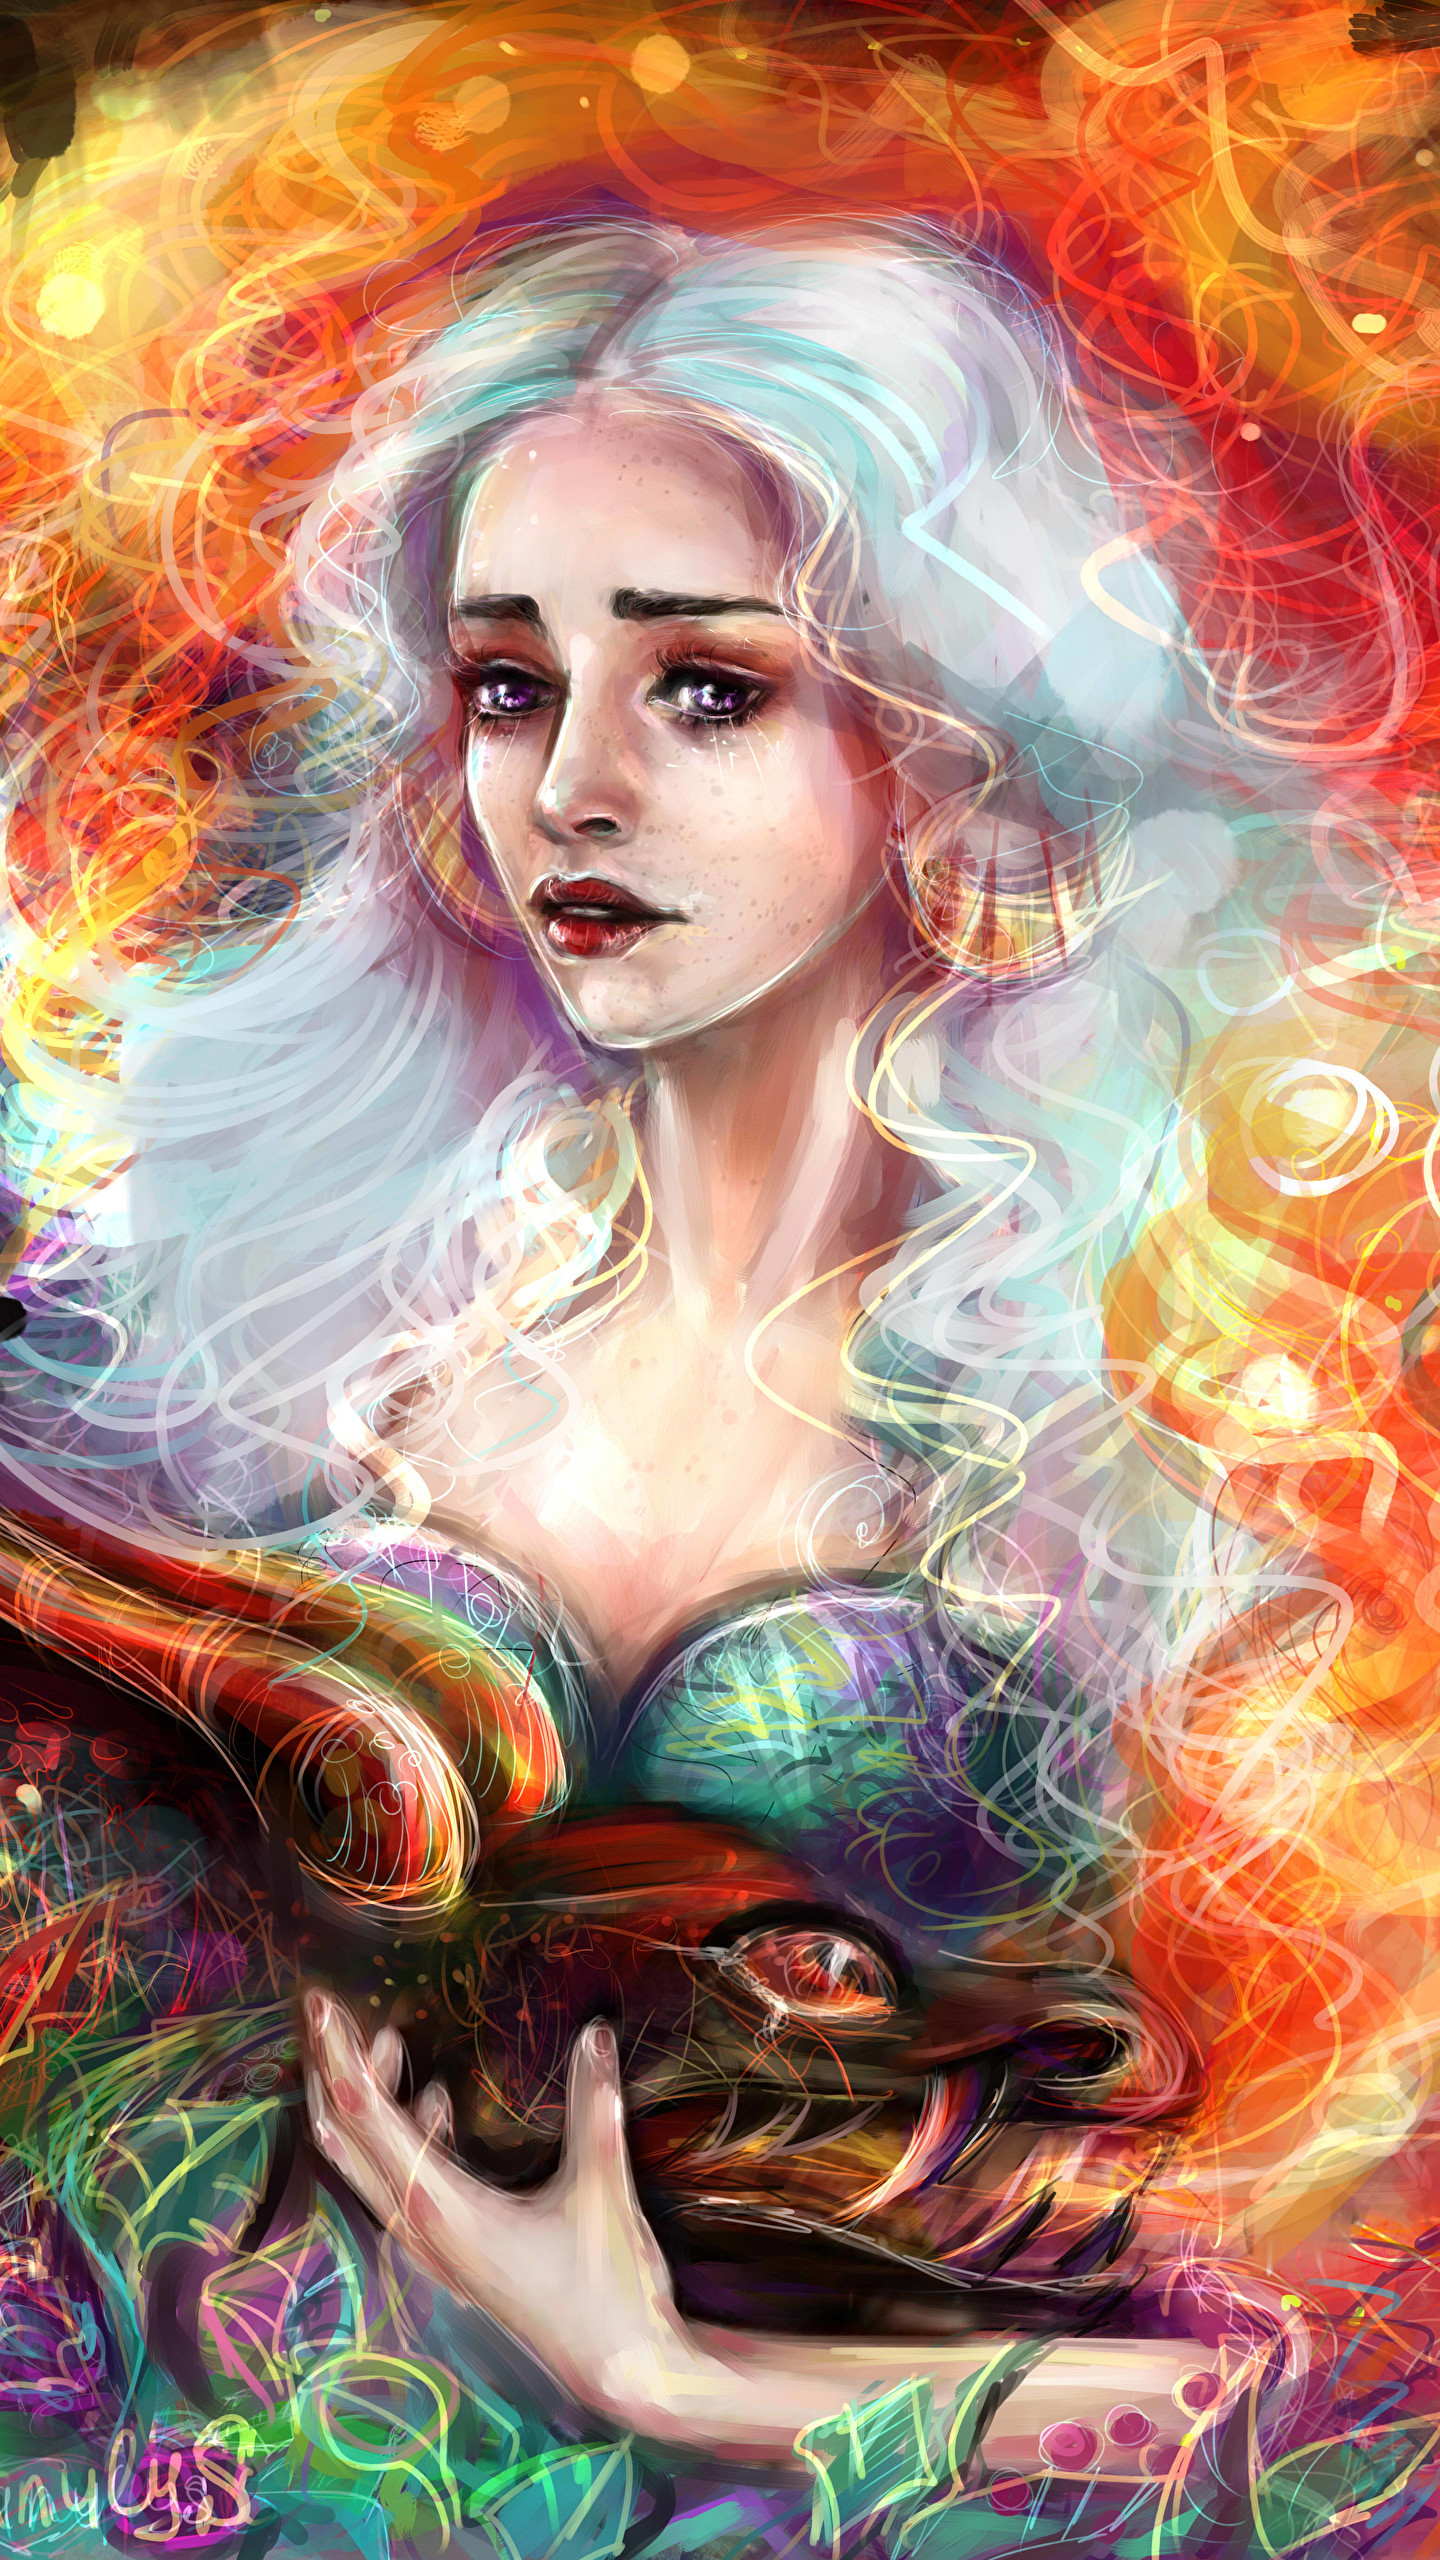 1440x2560 Wallpapers Game of Thrones Daenerys Targaryen Emilia Clarke Blonde girl  Girls Fantasy Movies Painting Art 